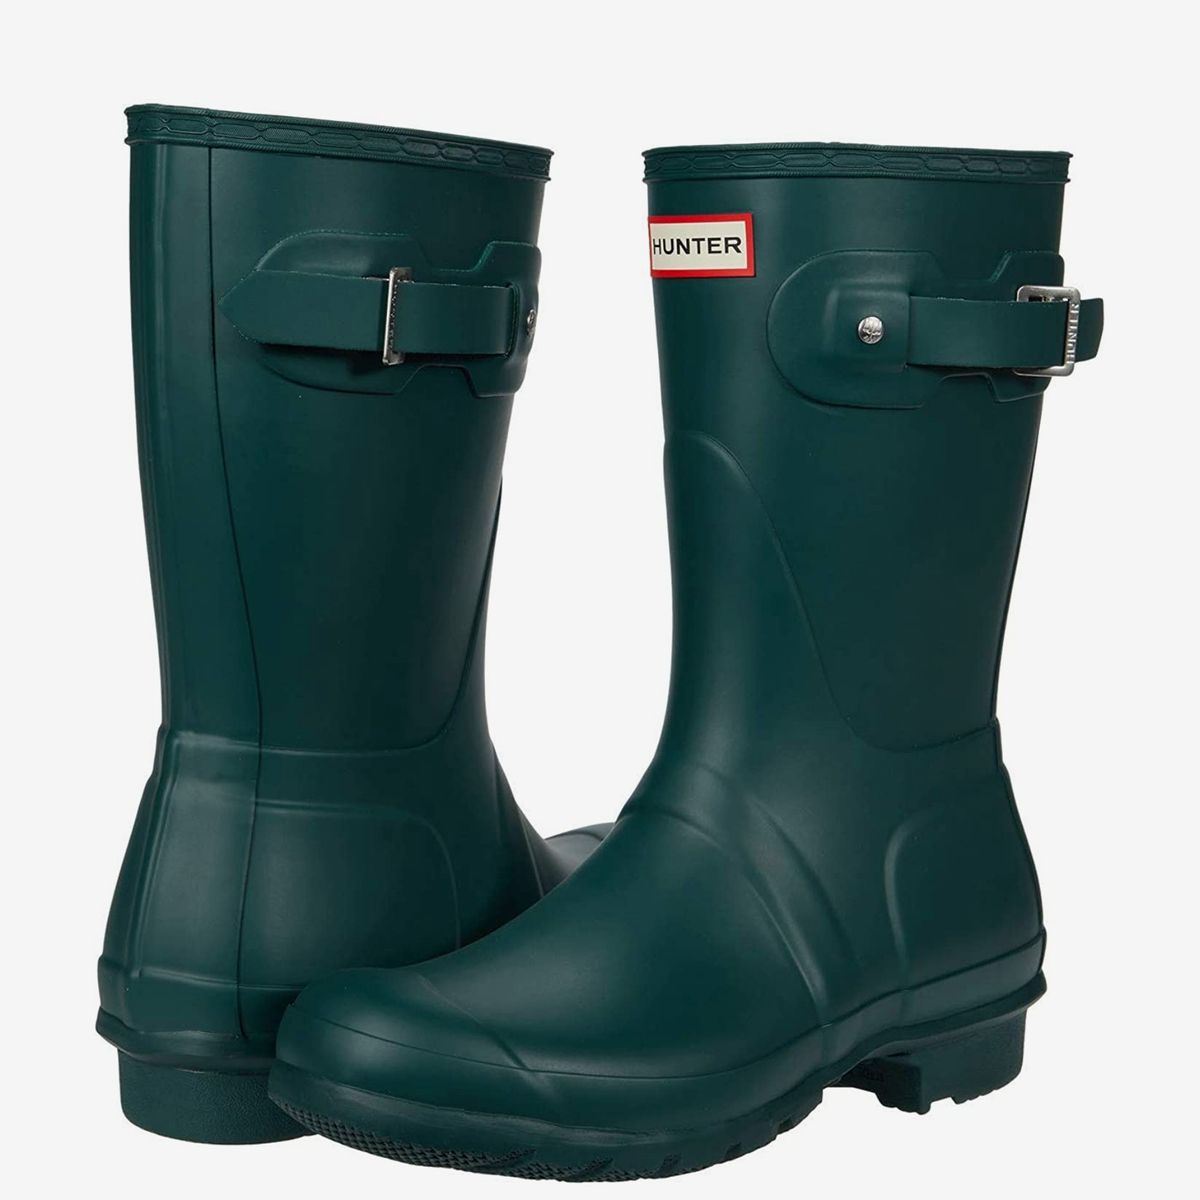 rain boots expensive